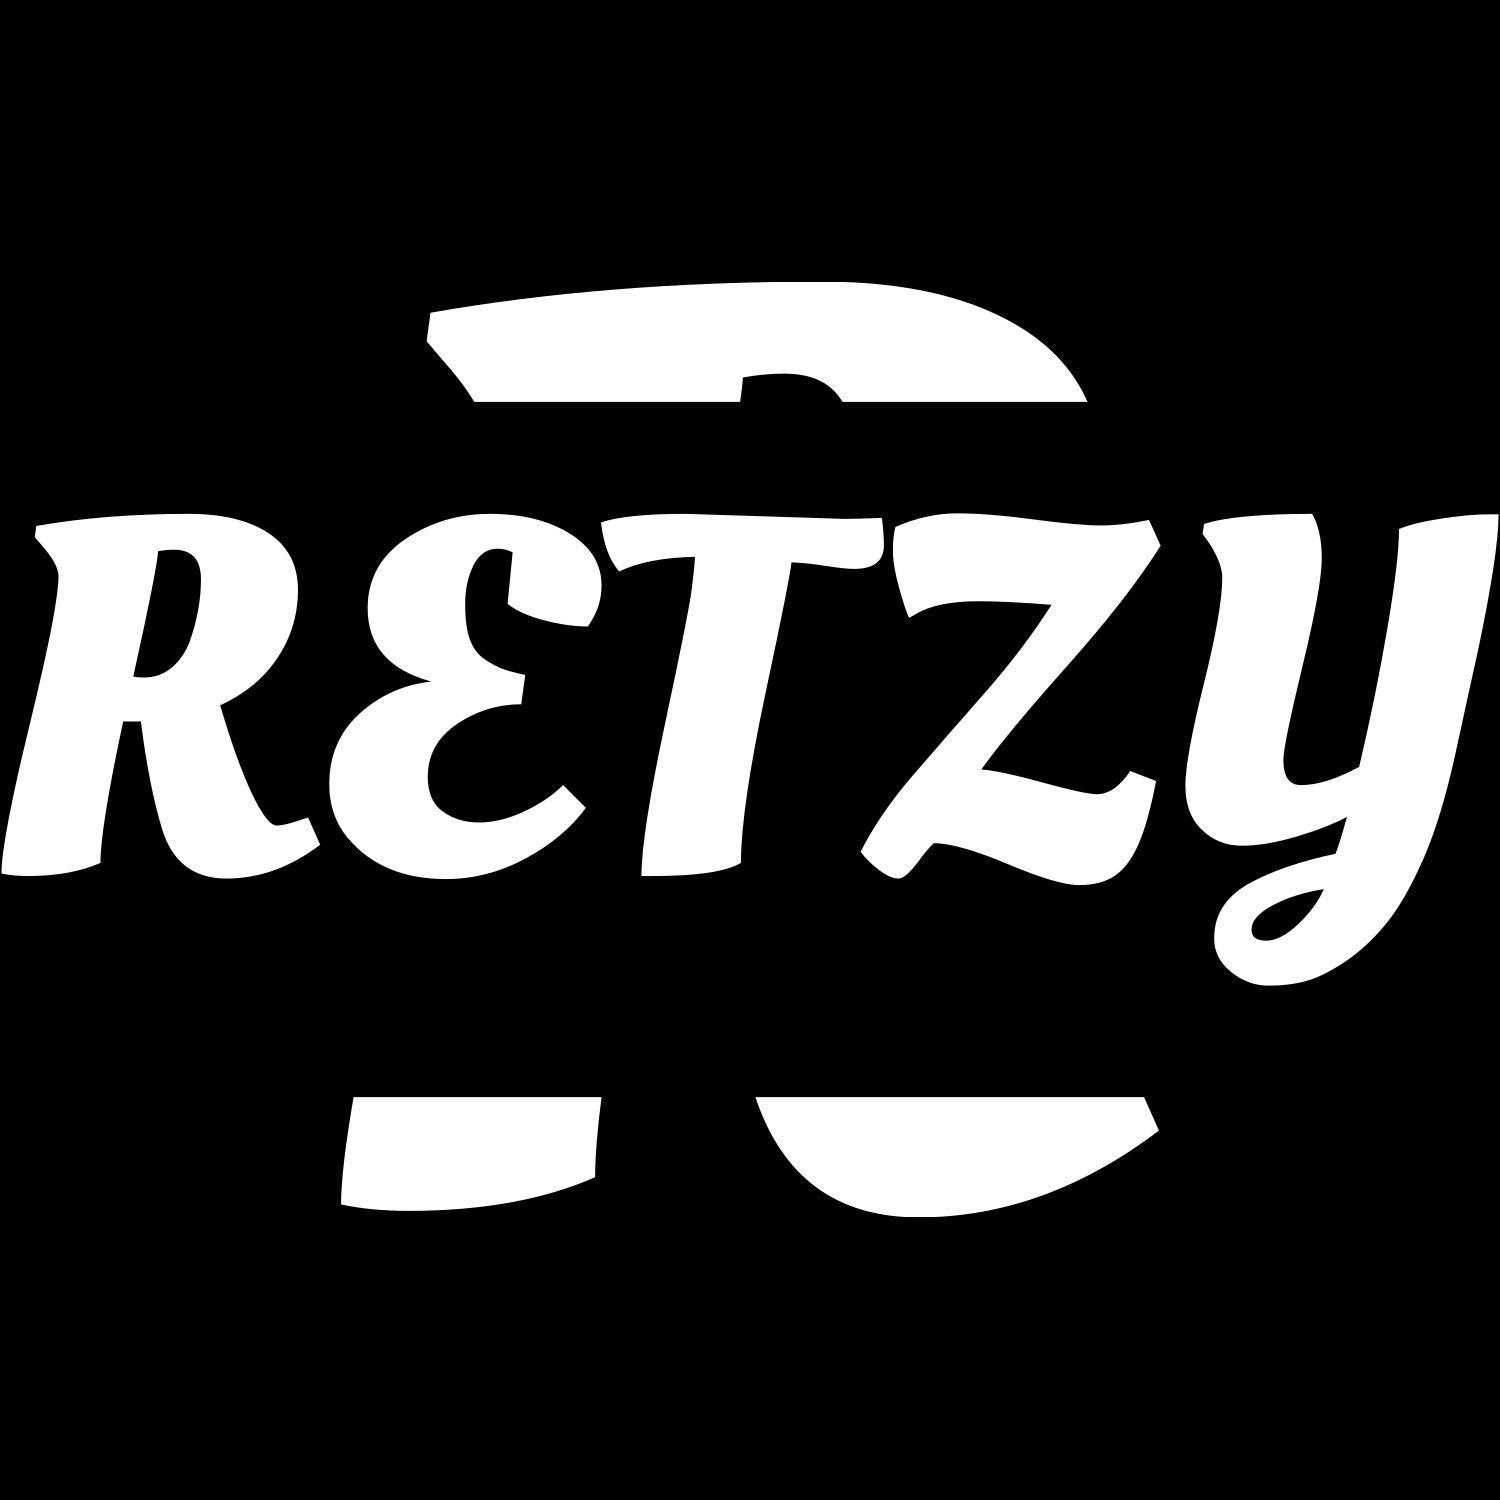 Player RETZY47 avatar